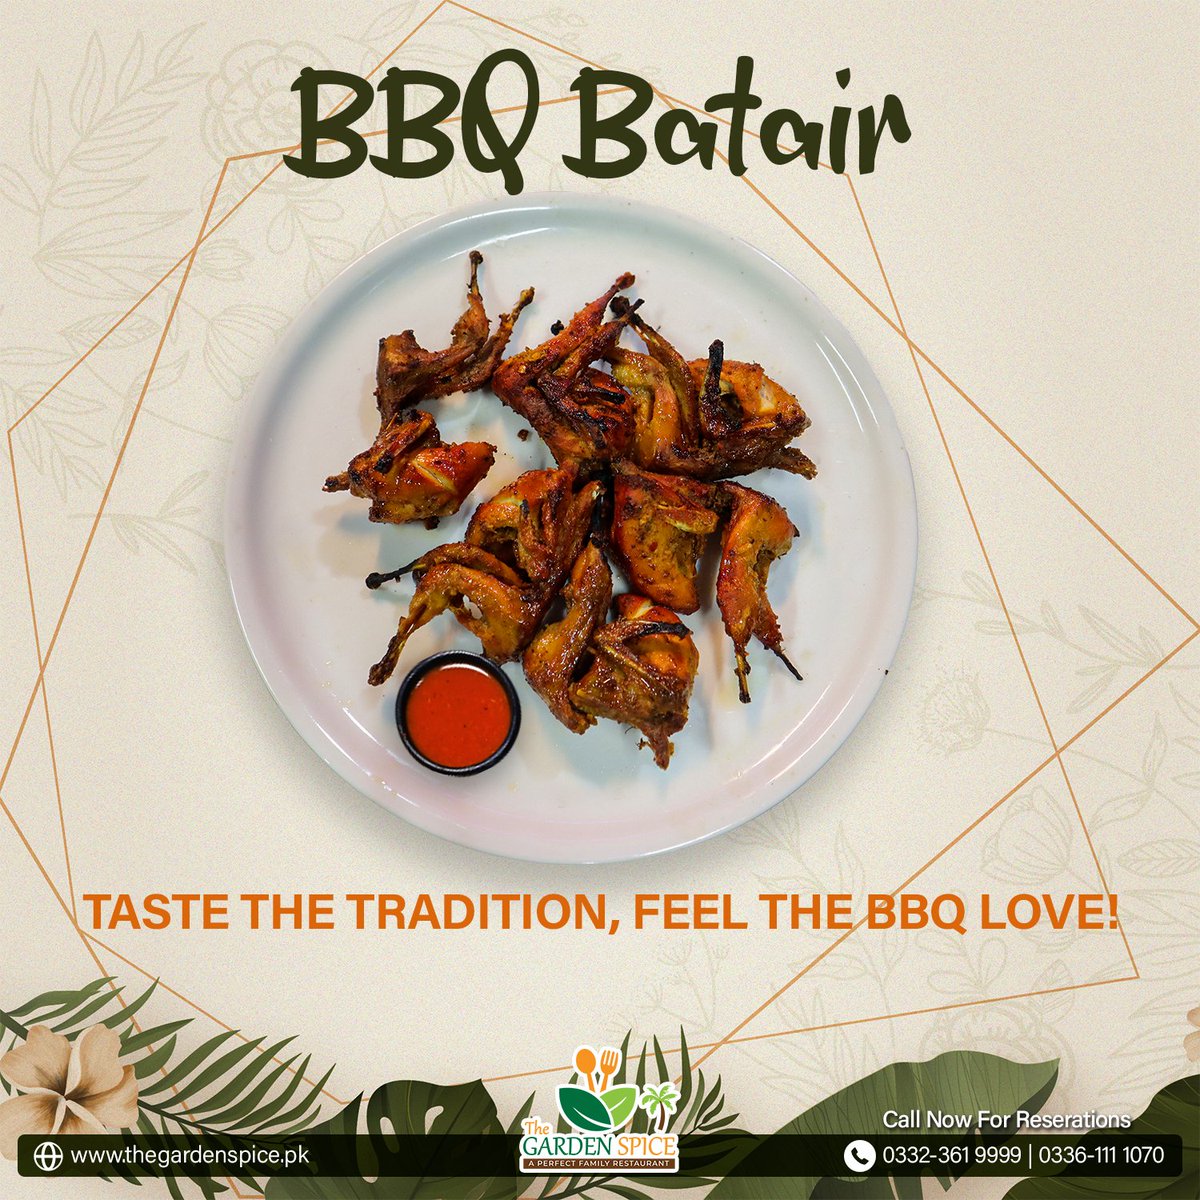 Try our Mouthwatering BBQ #Batair. 😋
A Perfect Family Restaurant 🌴
🛑Reservations
☎️ 0332-3619999 | 0336-1111070
#TheGardenSpice #ChickenSeekhKabab #TenderTemptations #ChickenReshmiKabab #BeefSeekhKabab #ChickenTikkaBoti #GrilledPerfection #ChickenMalaiBoti #BeefBihariKabab